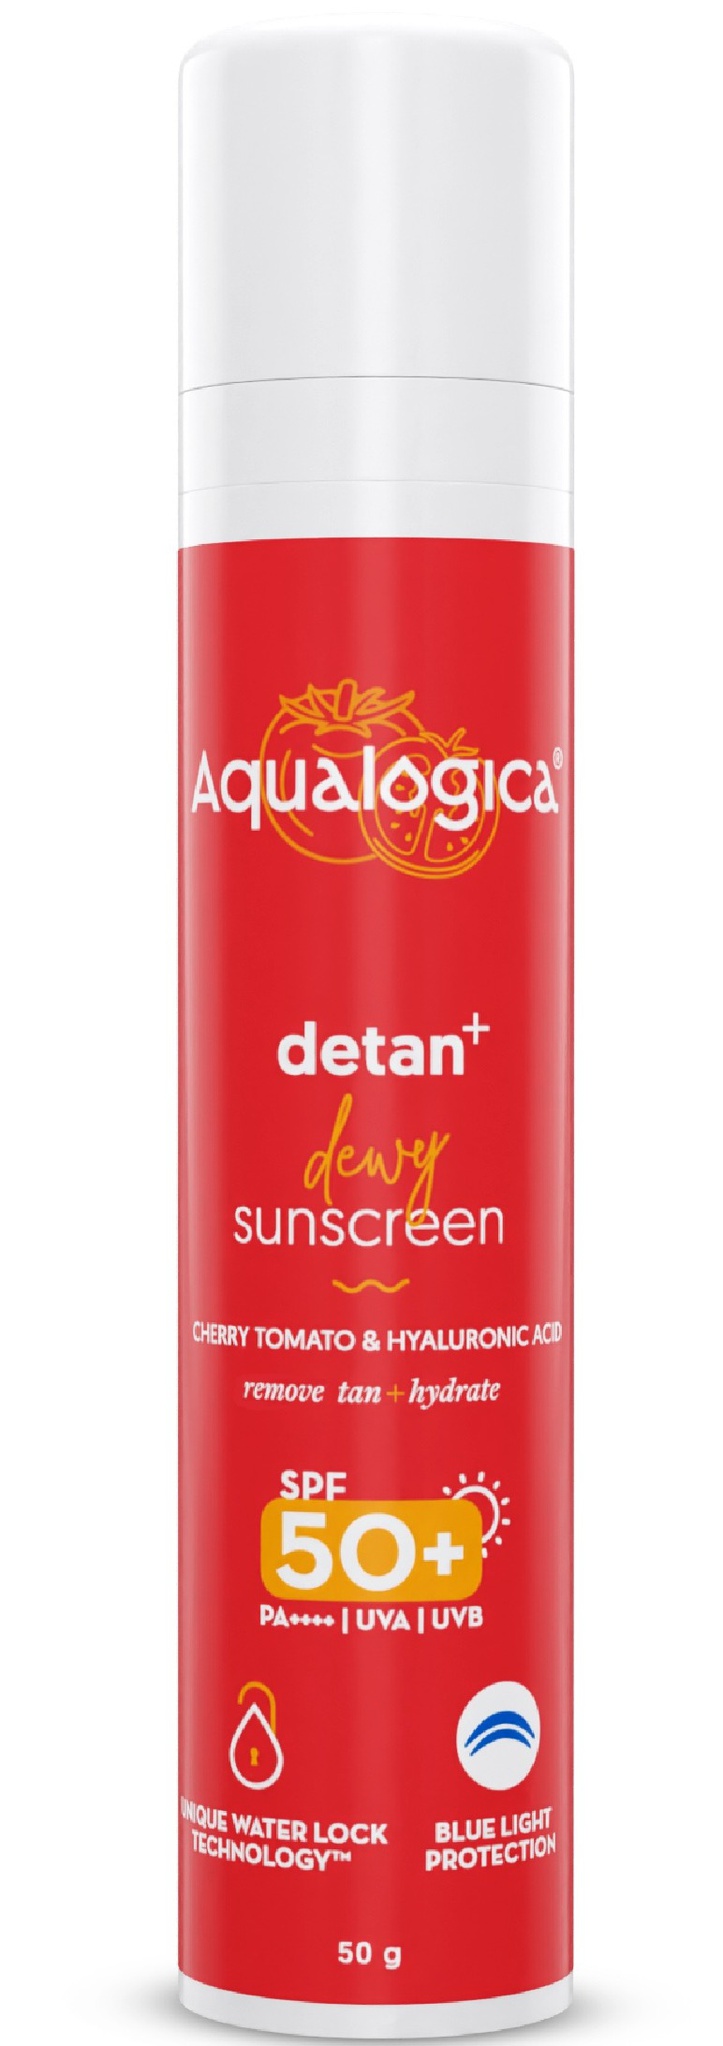 Aqualogica Detan Sunscreen